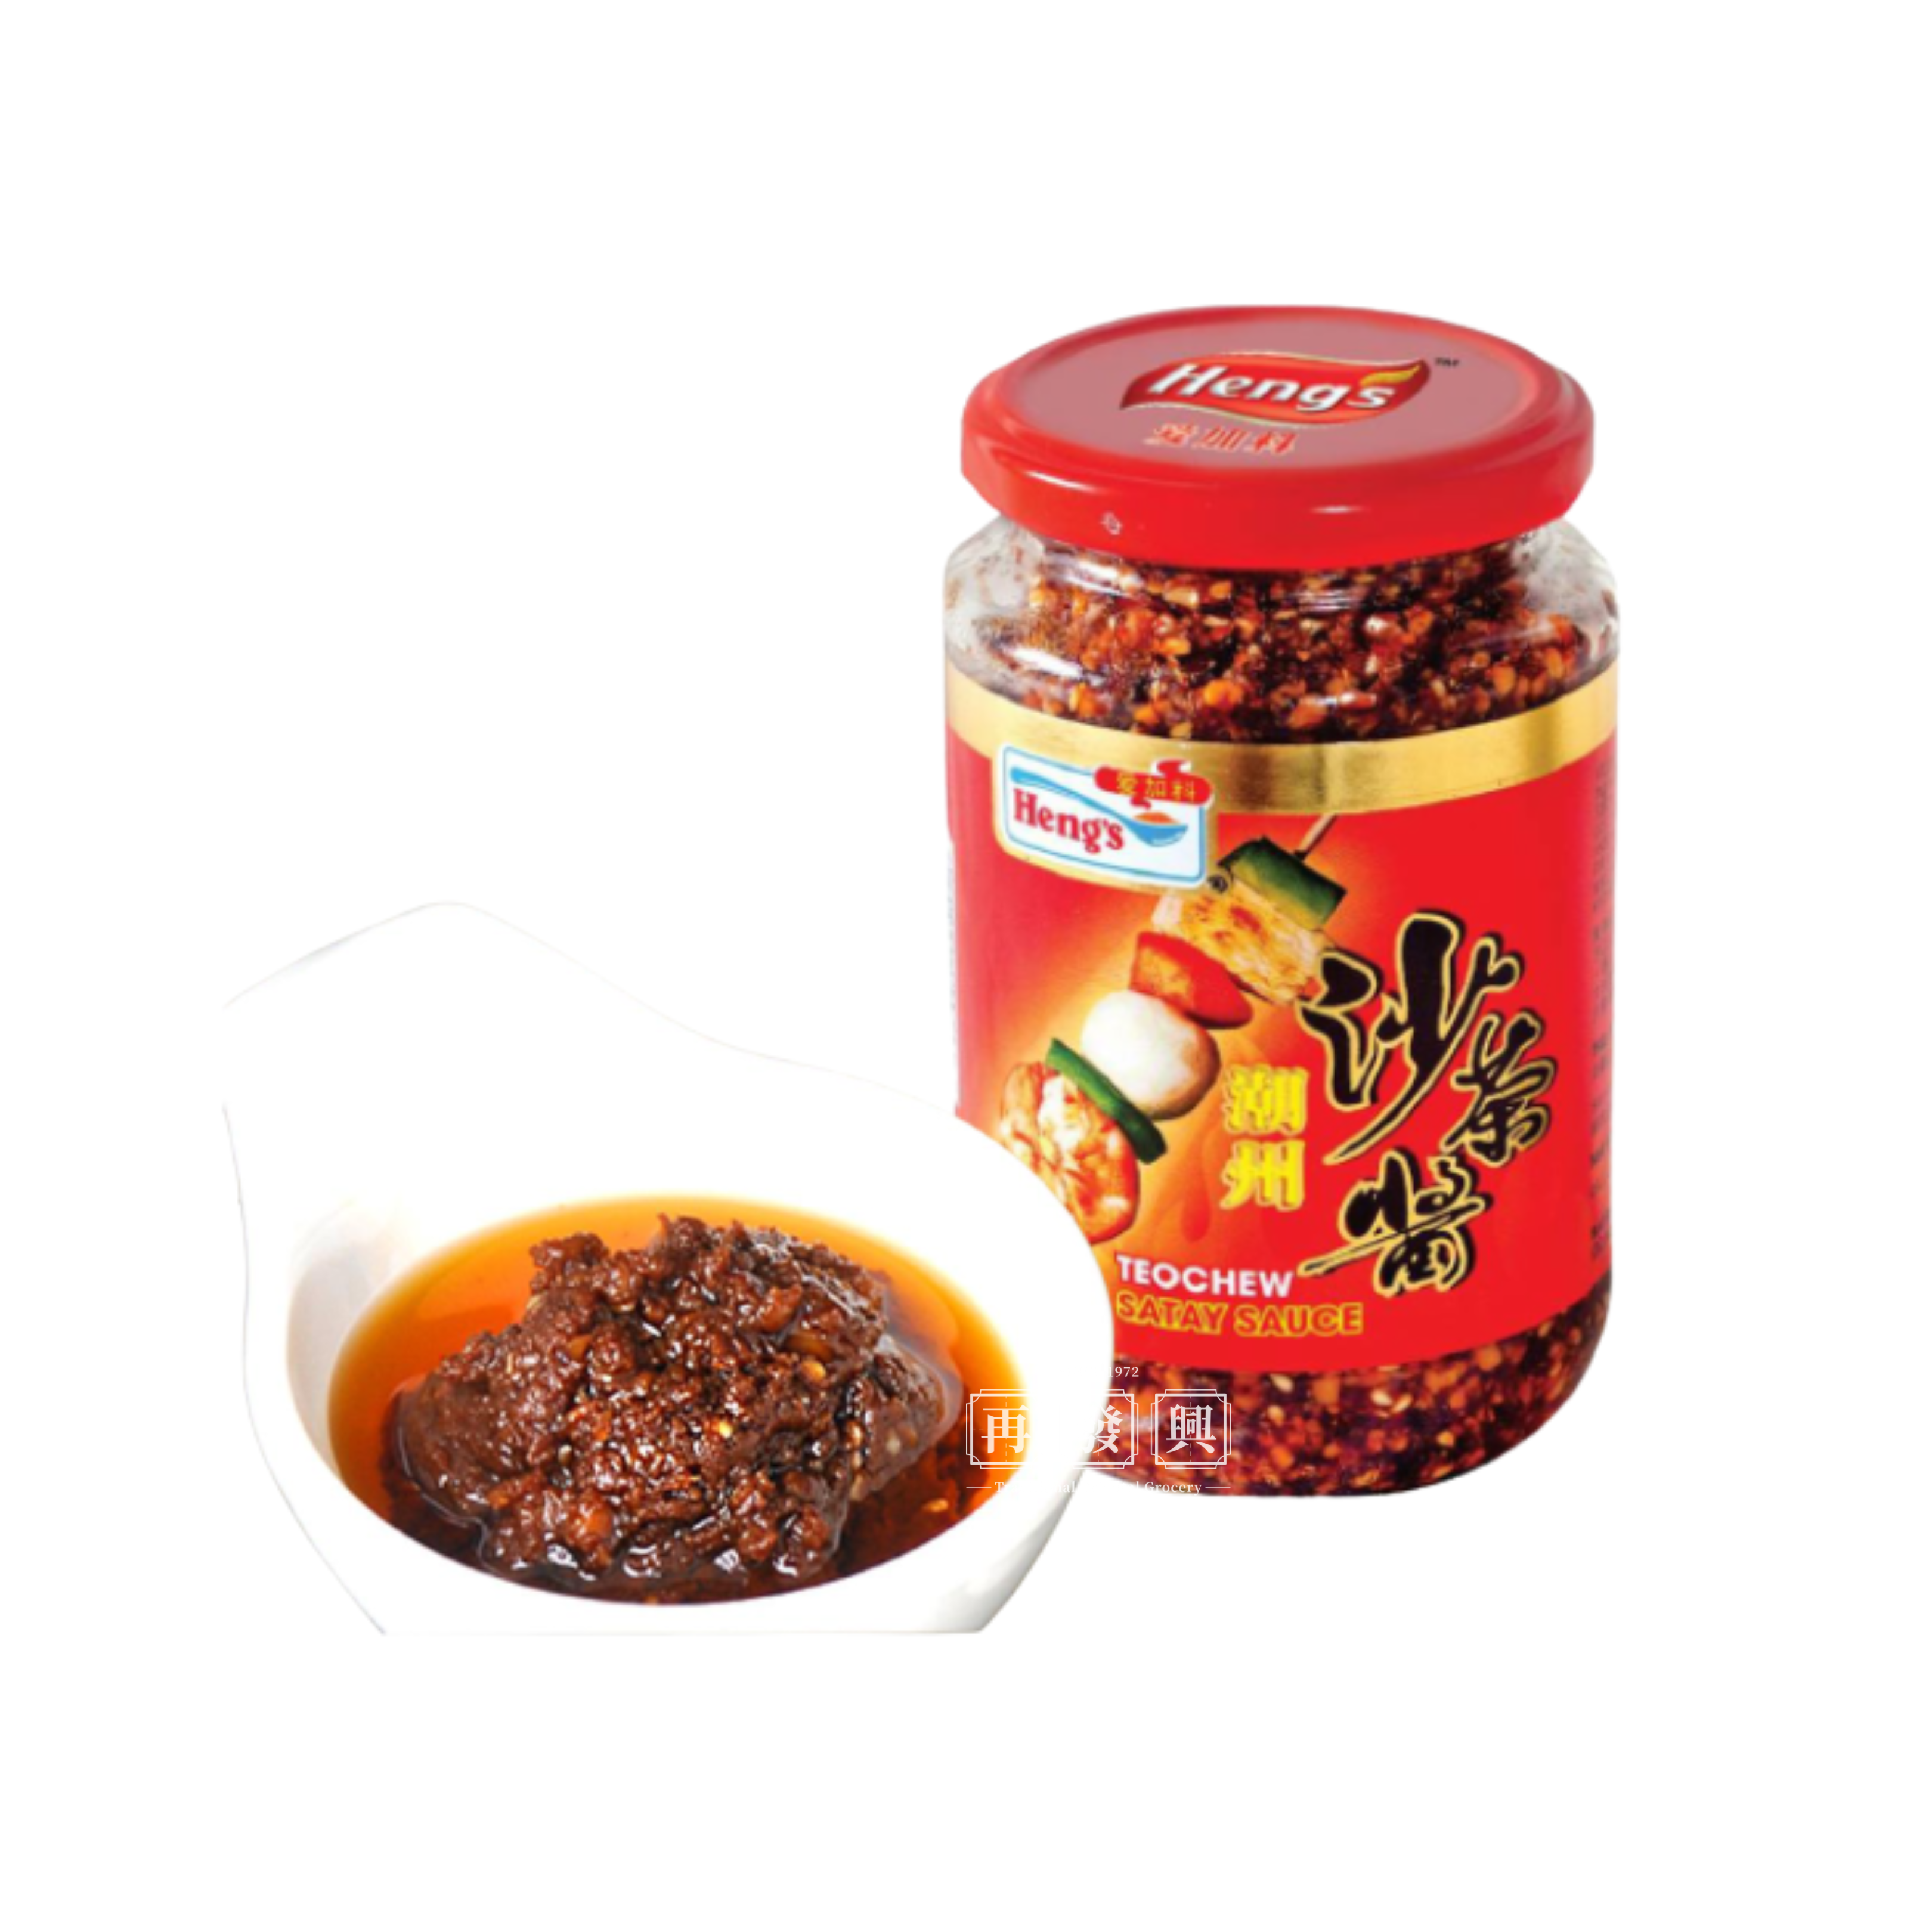 Heng's Teochew Satay Sauce 350g